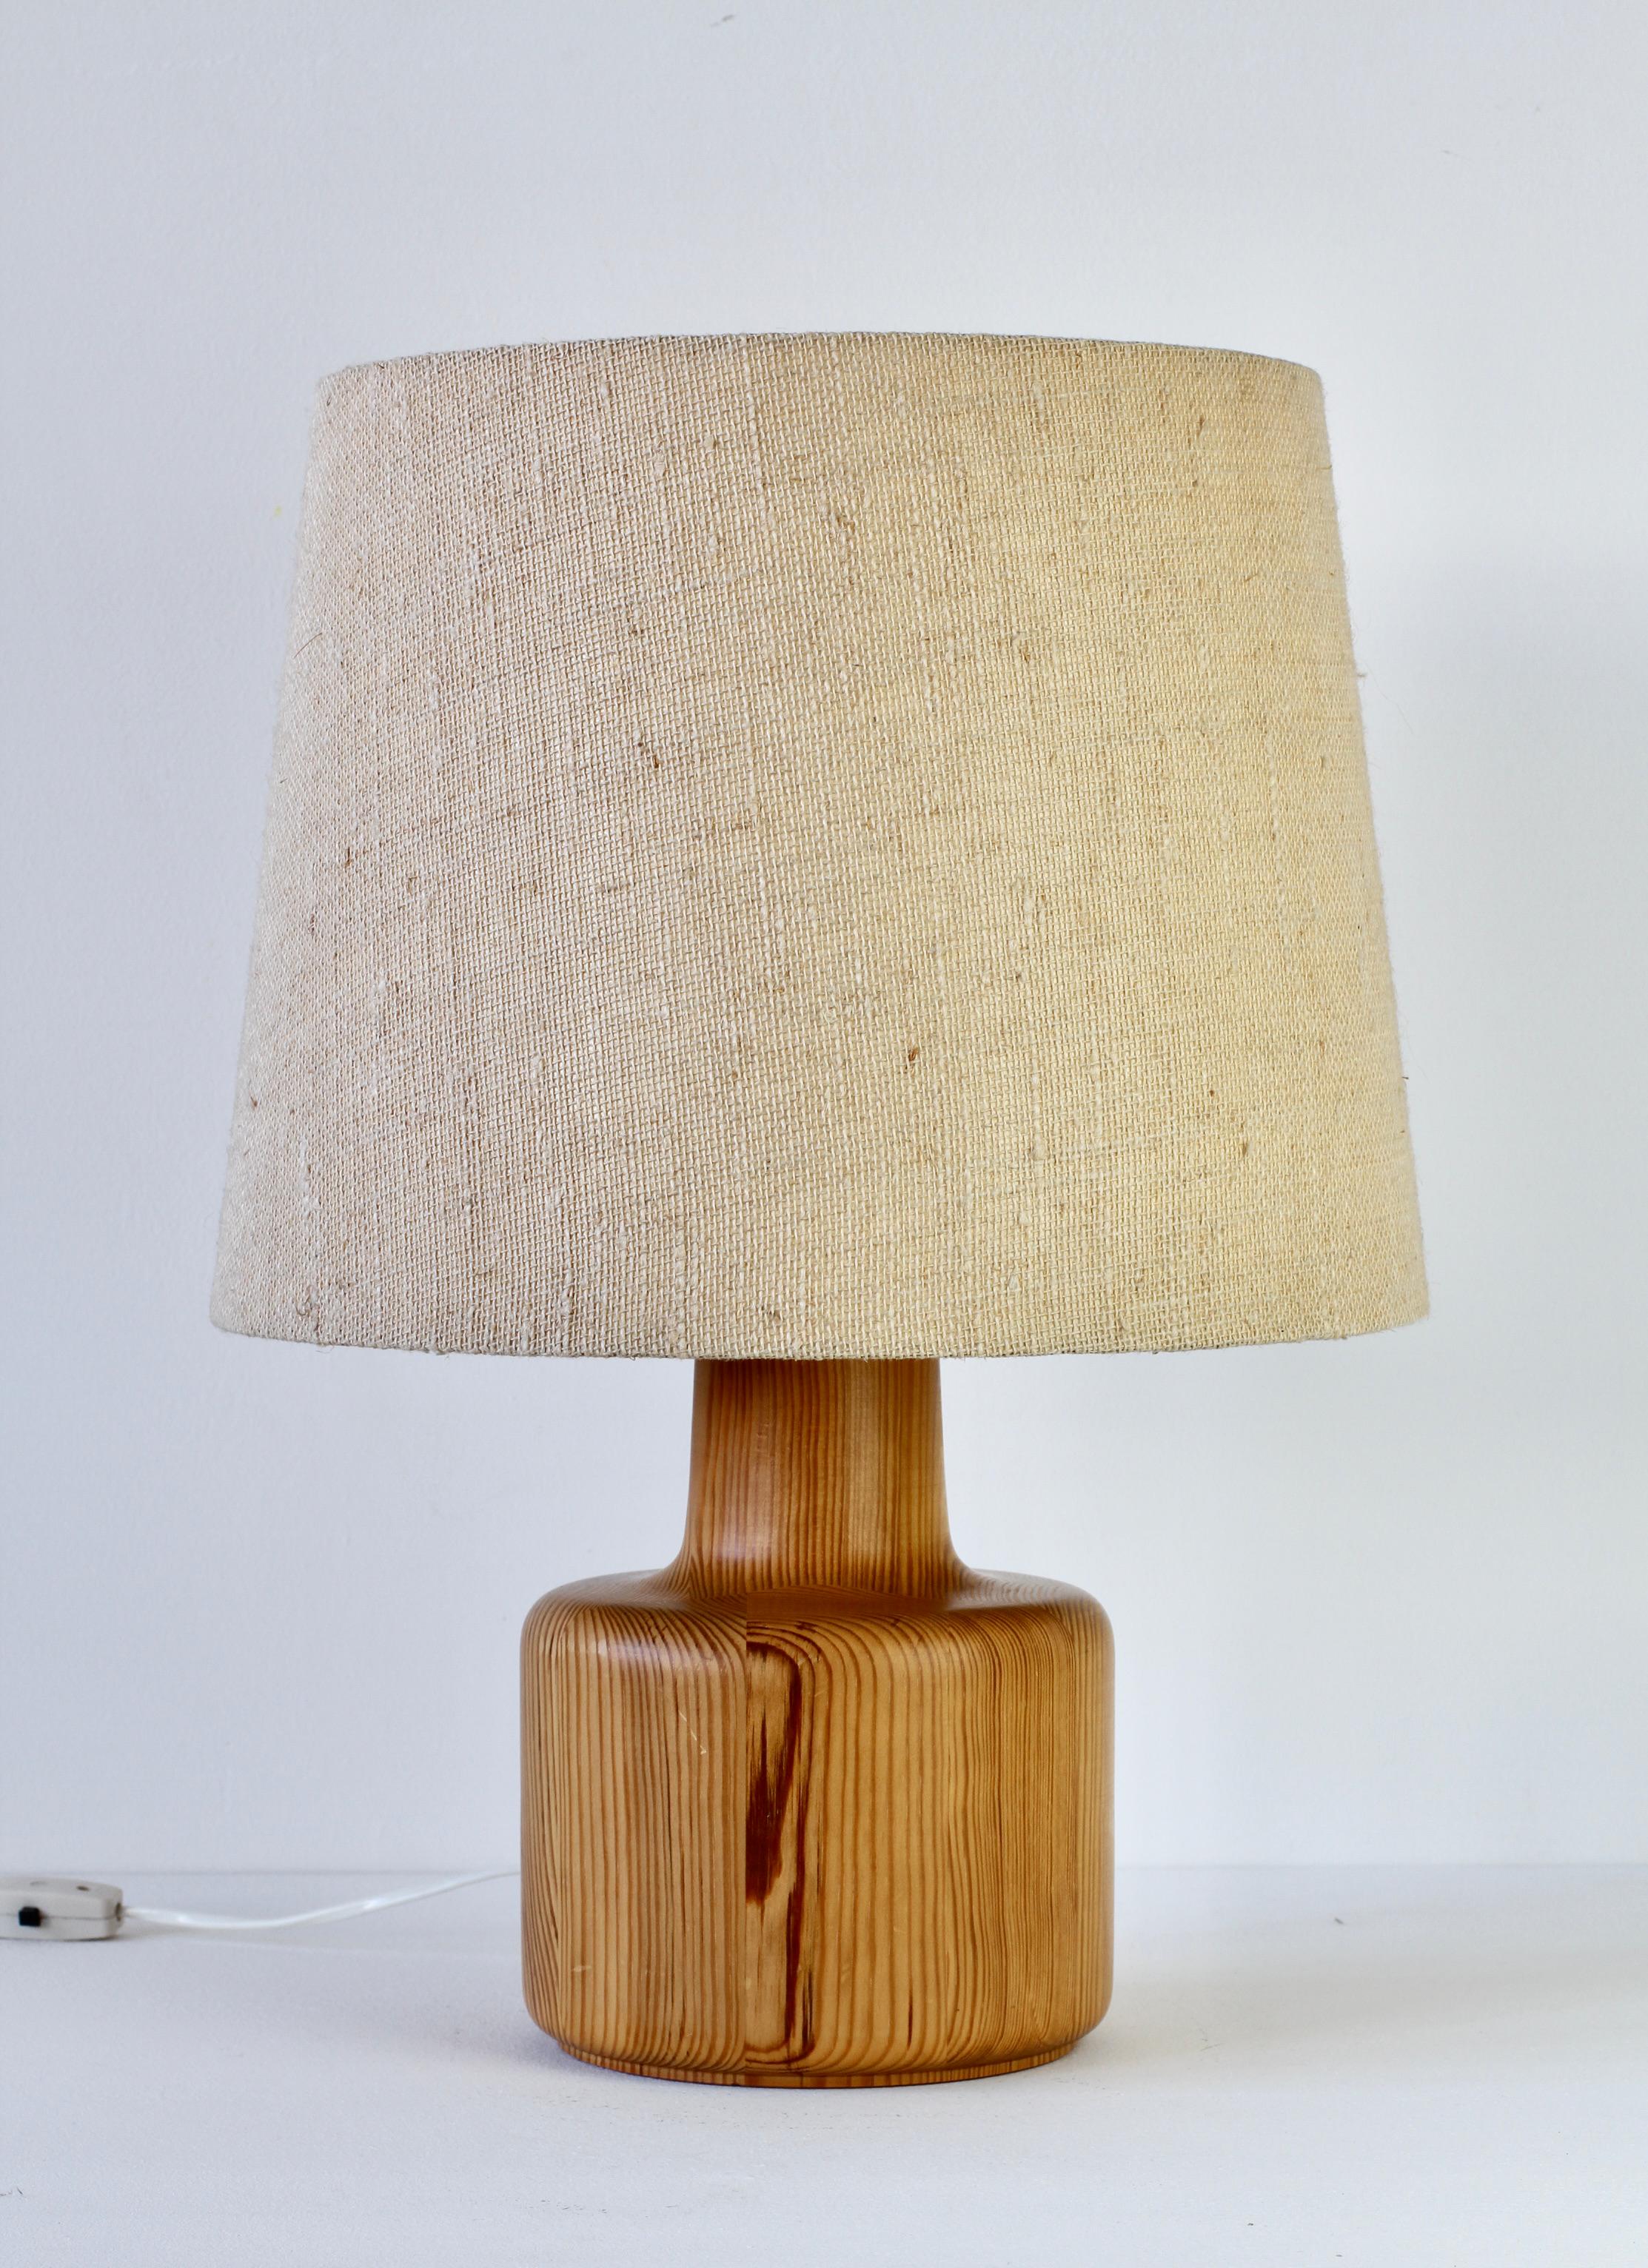 20th Century 1970s Large Scandinavian Style Pine Wood Table Light Lamp Original Fabric Shade